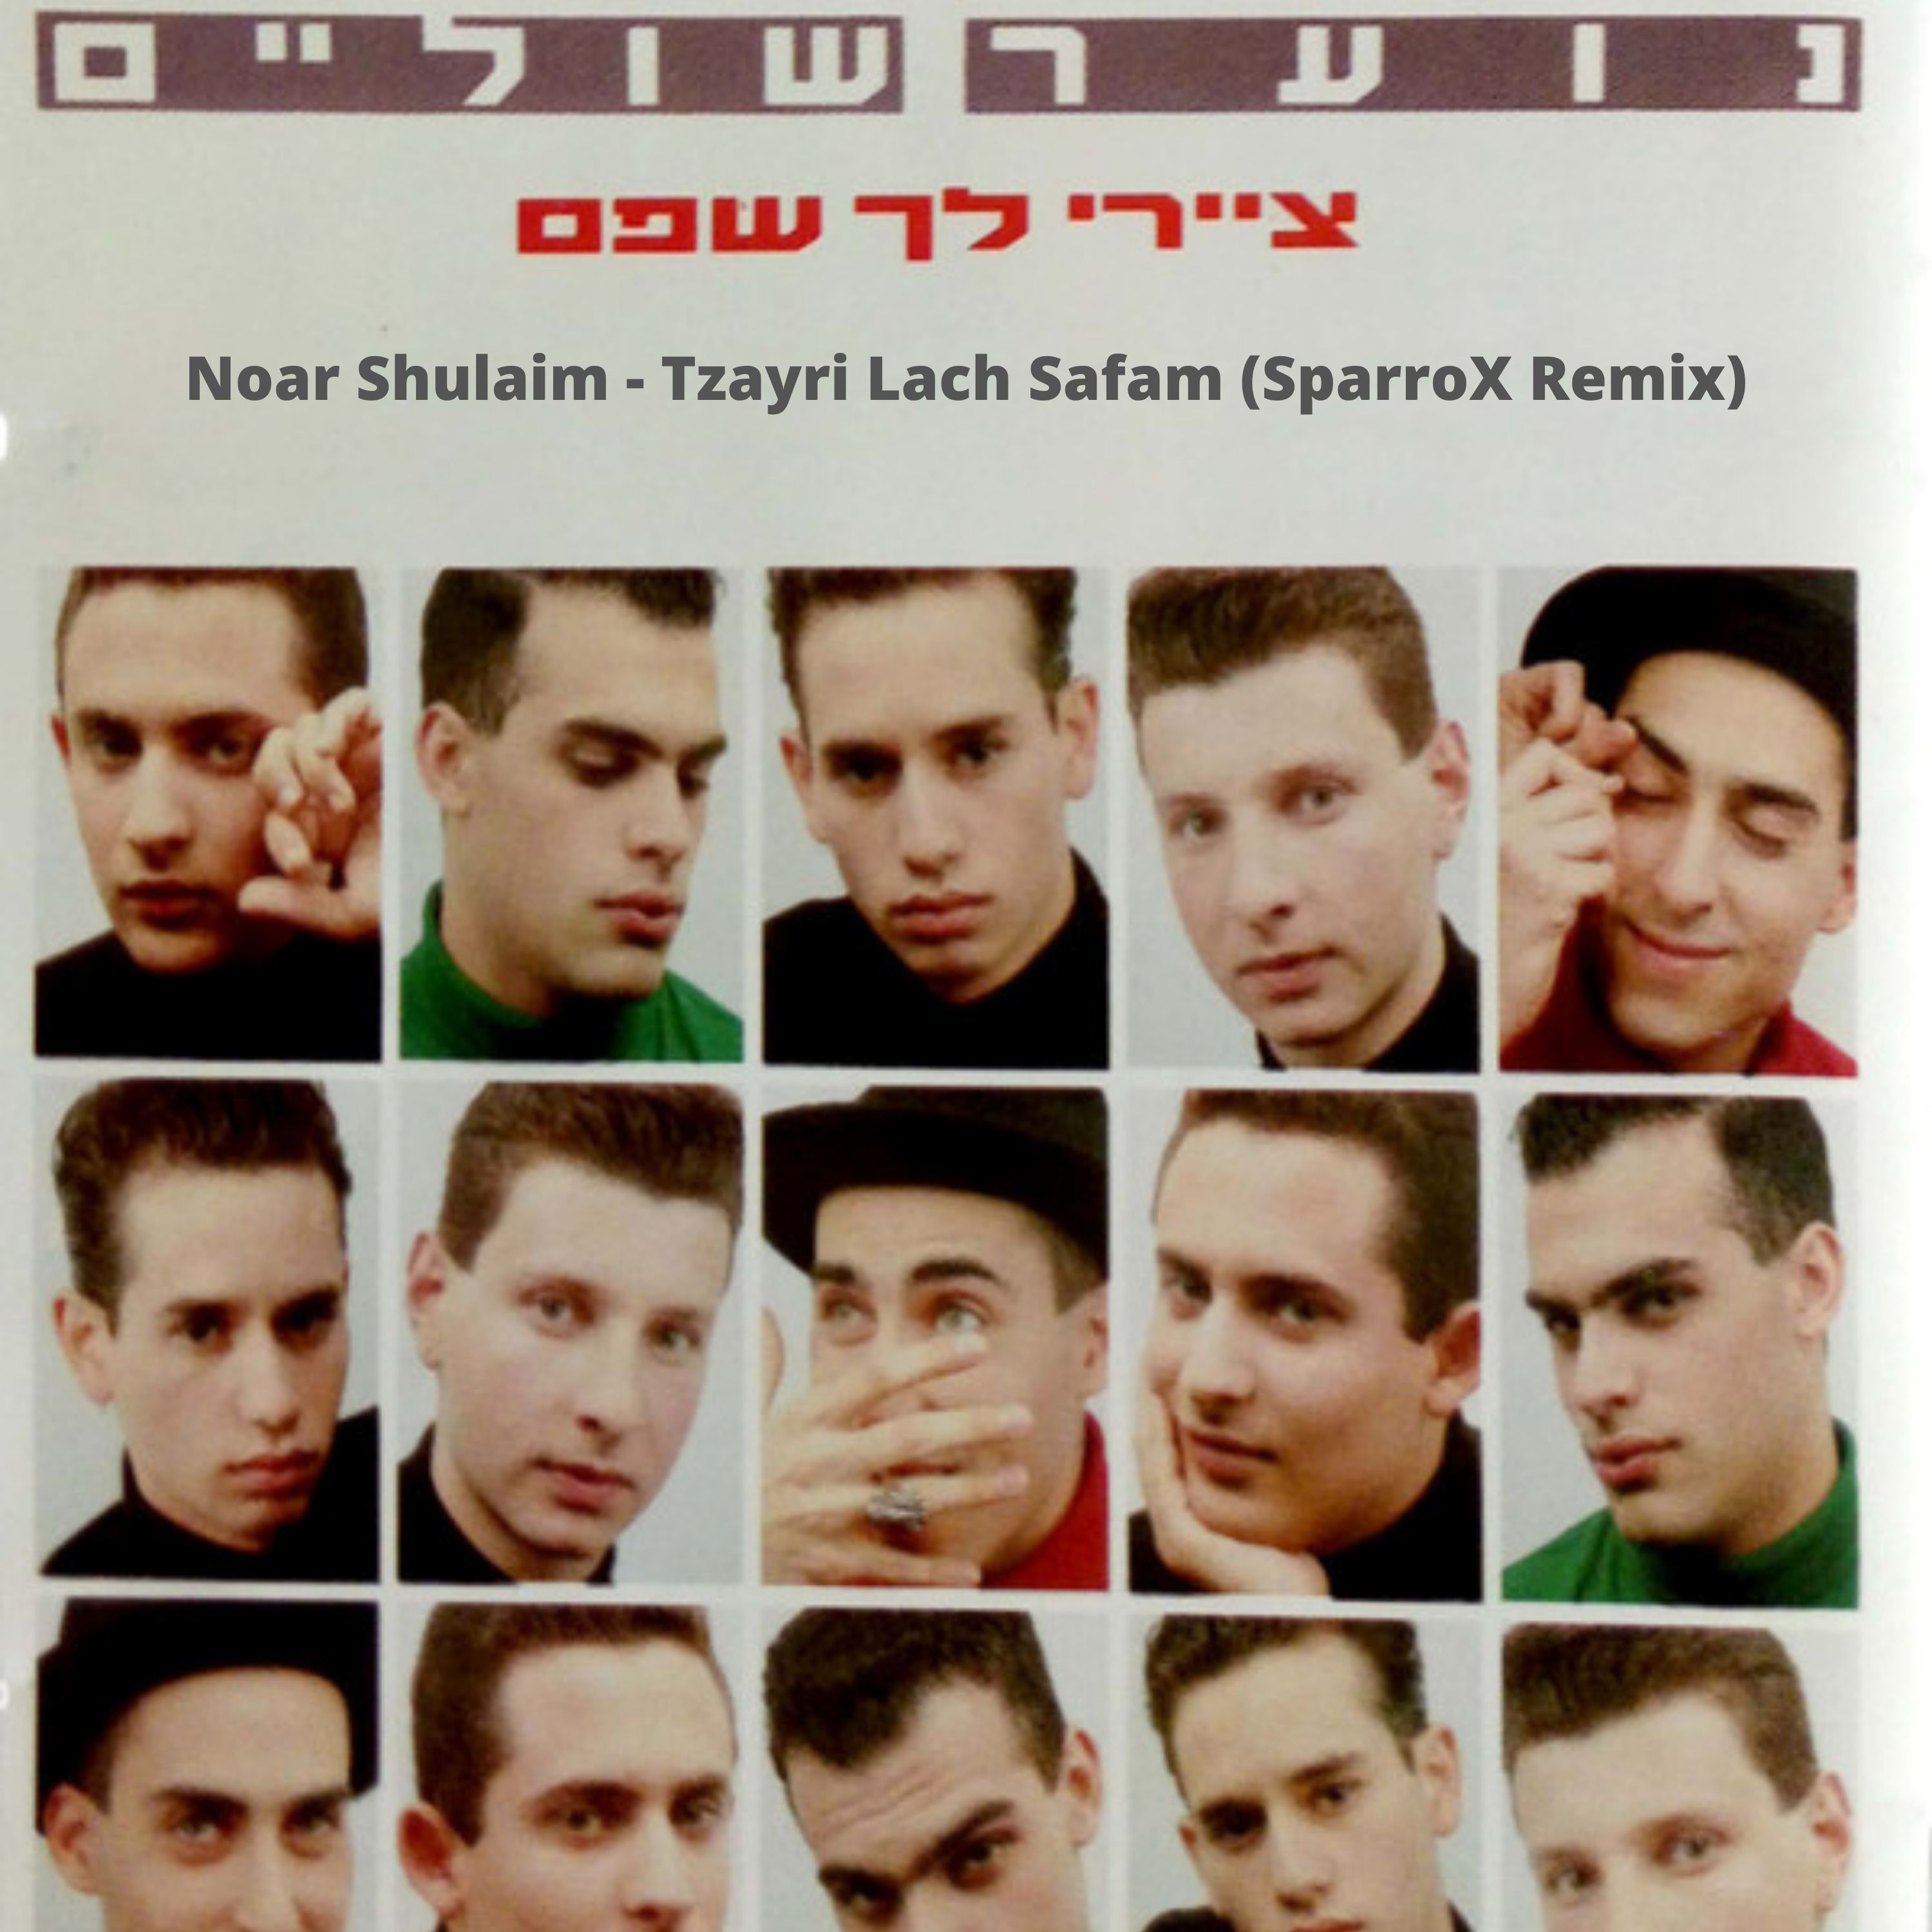 डाउनलोड करा Noar Shulaim - Tzayri Lach Safam (SparroX Remix) | Free download